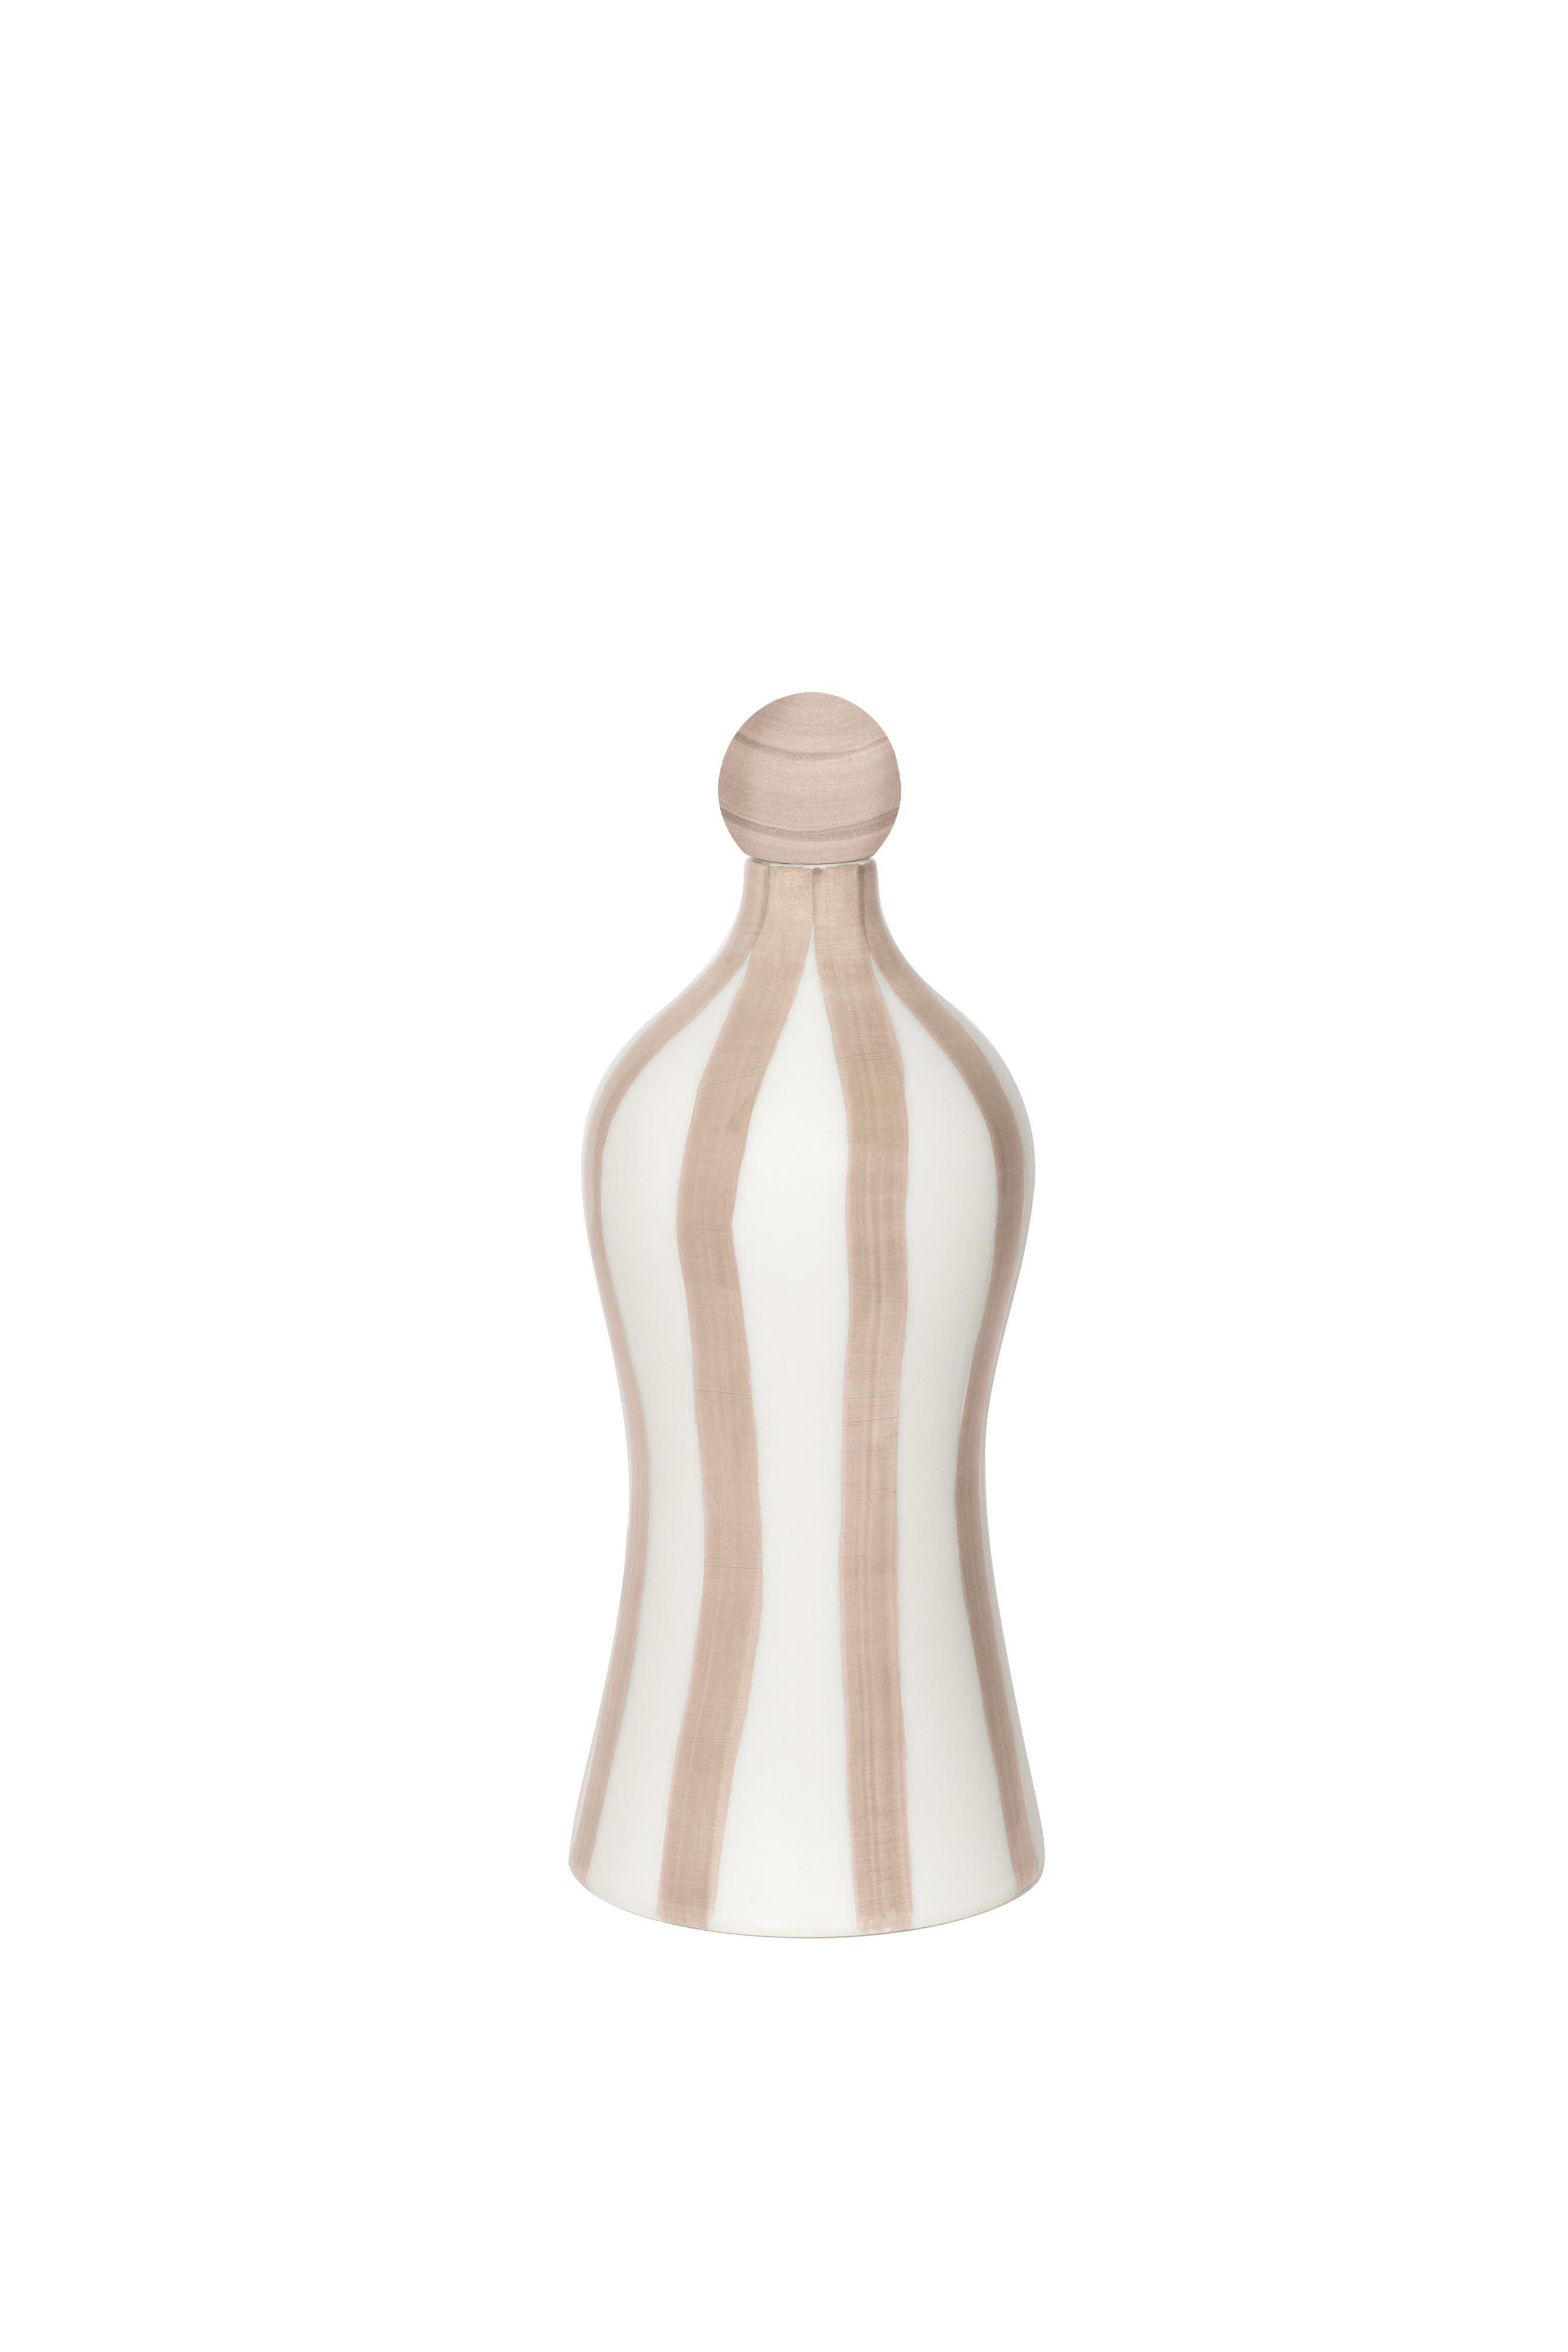 Zafferano Poldina Stopper Sabbia / Sand + Lido Keramik Flasche mit vertikalen Streifen in Creme